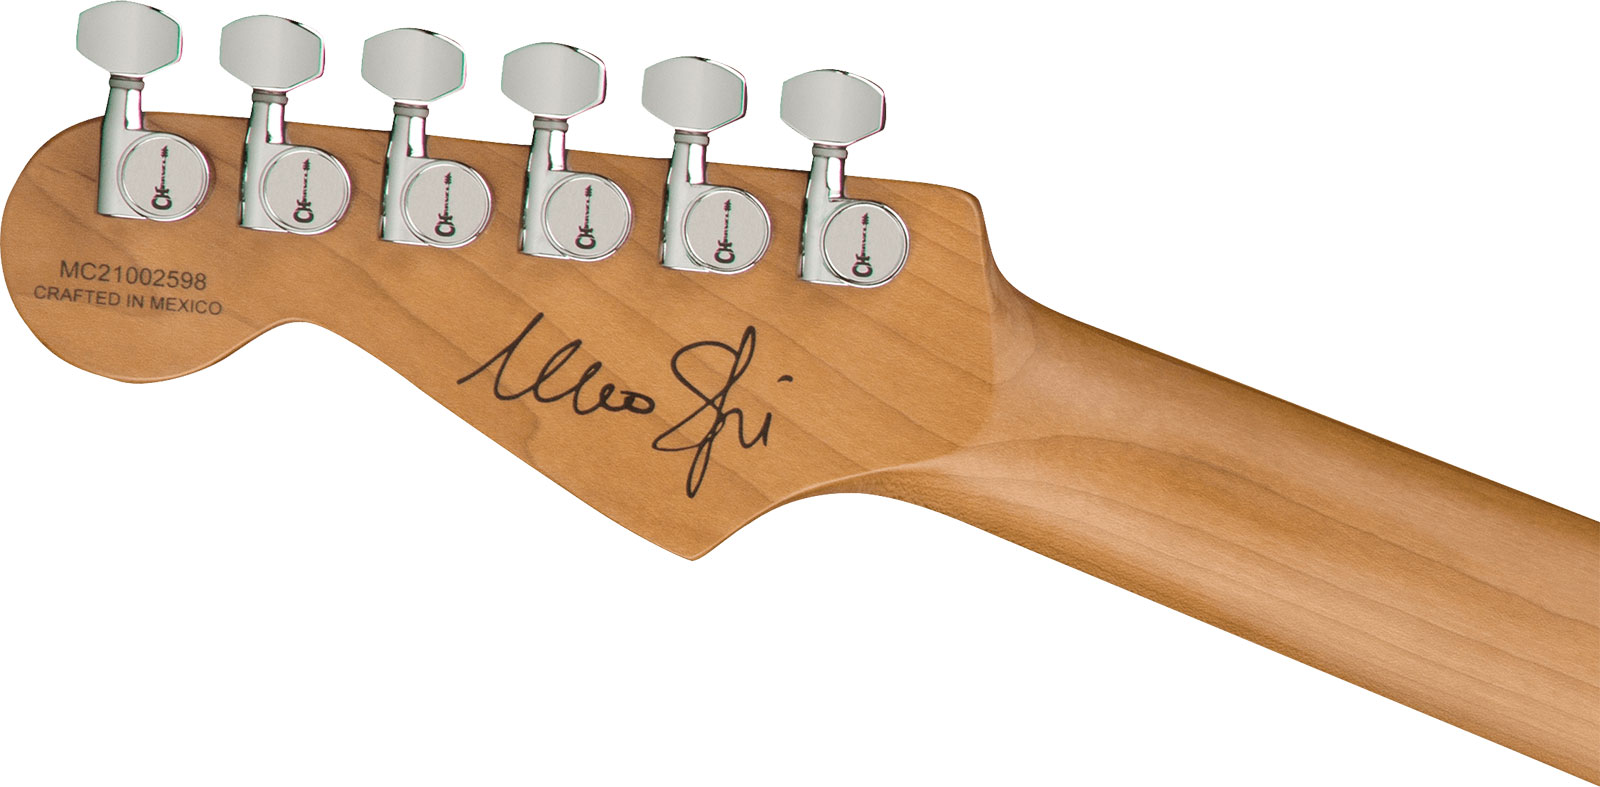 Charvel Marco Sfogli So Cal Style 1 Pro Mod Signature Hss Emg Fr Mn - Transparent Purple Burst - Signature electric guitar - Variation 3